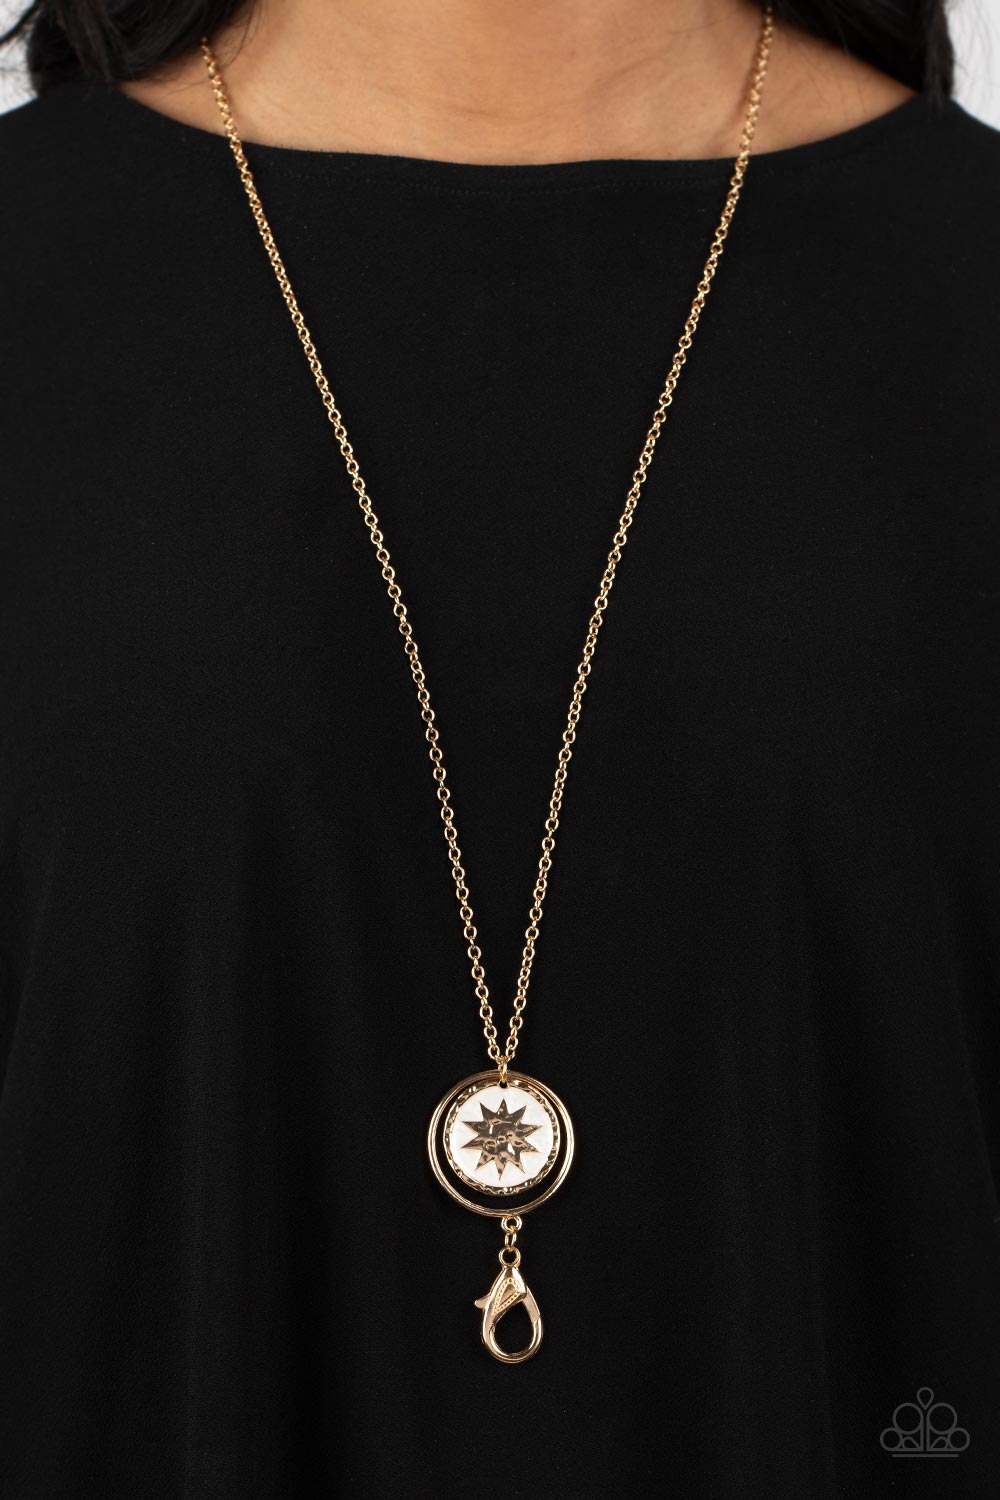 Cretian Crest - gold - Paparazzi LANYARD necklace